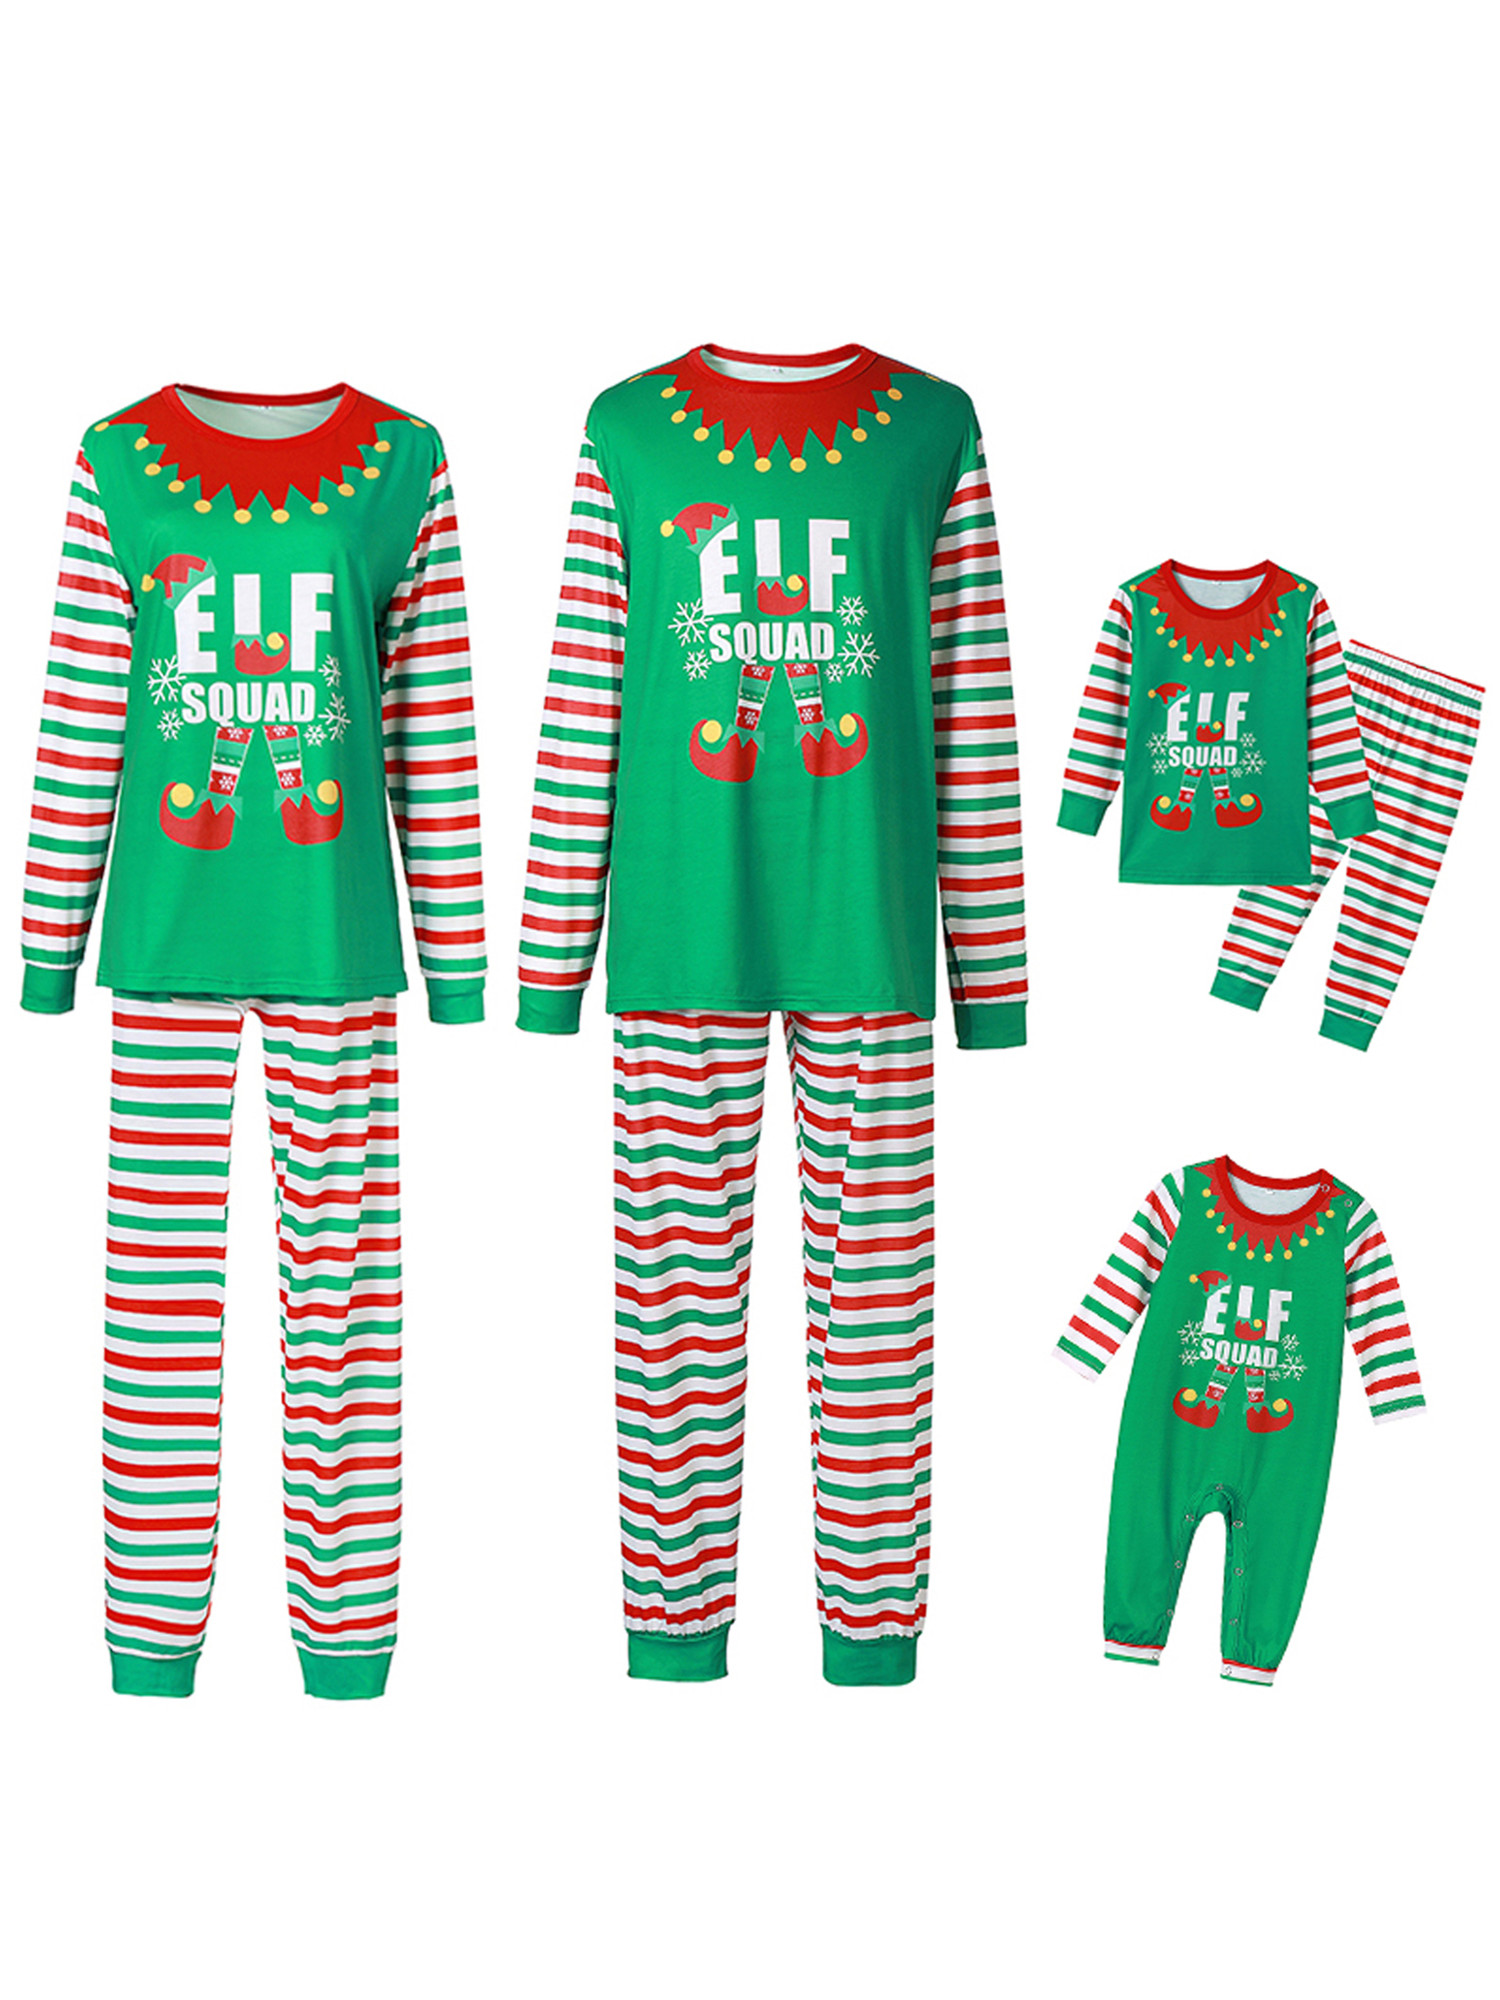 Aunavey Matching Family Christmas Pajamas Sets Holiday PJ's with ELF Printing Loungewear Sleepwear - image 1 of 6